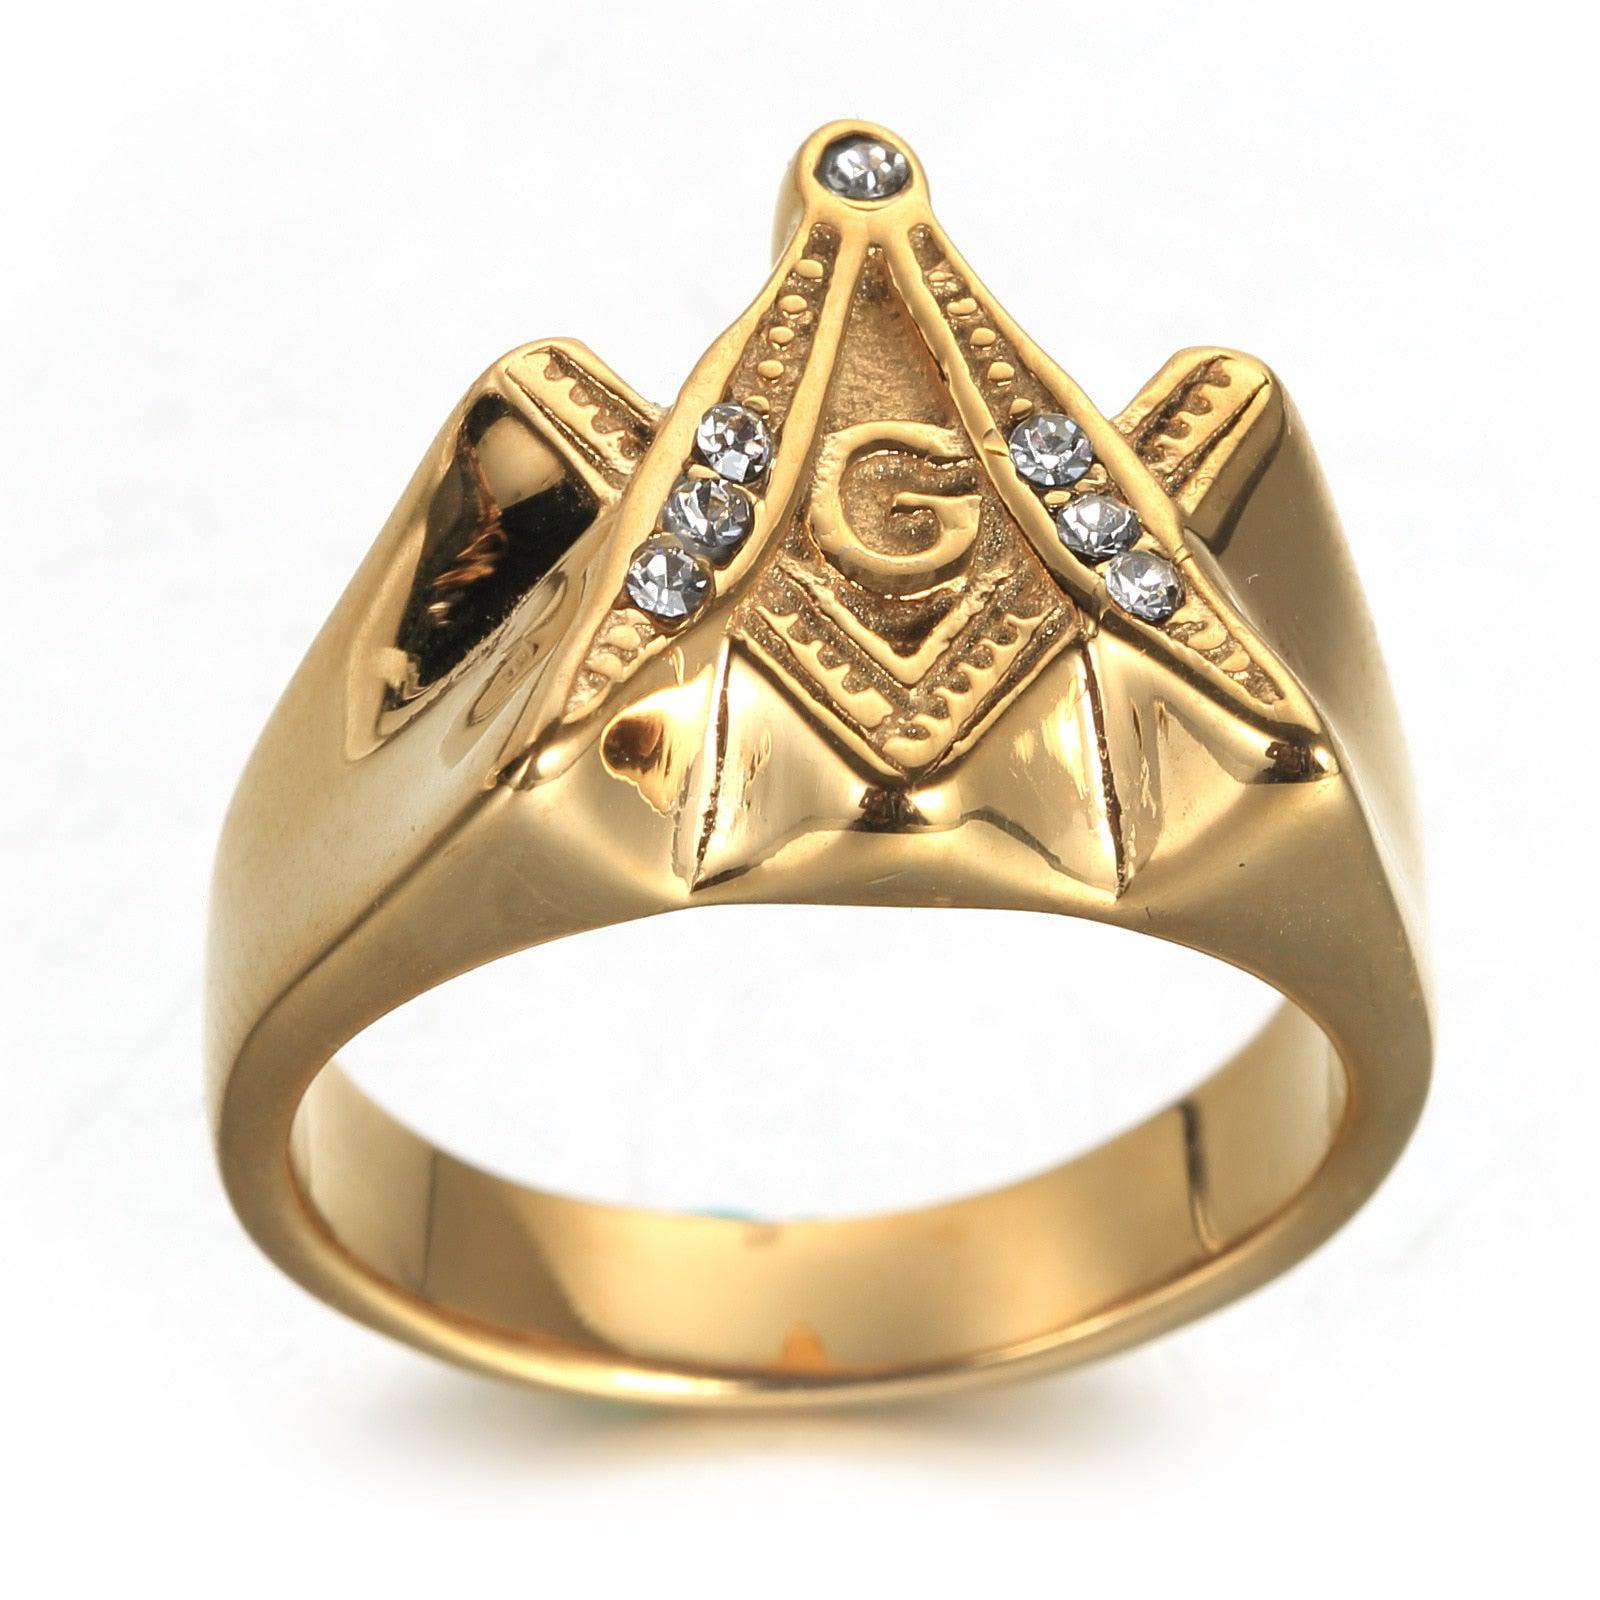 Master of Mason Gold Masonic Ring - Stainless Steel-rings-Masonic Makers